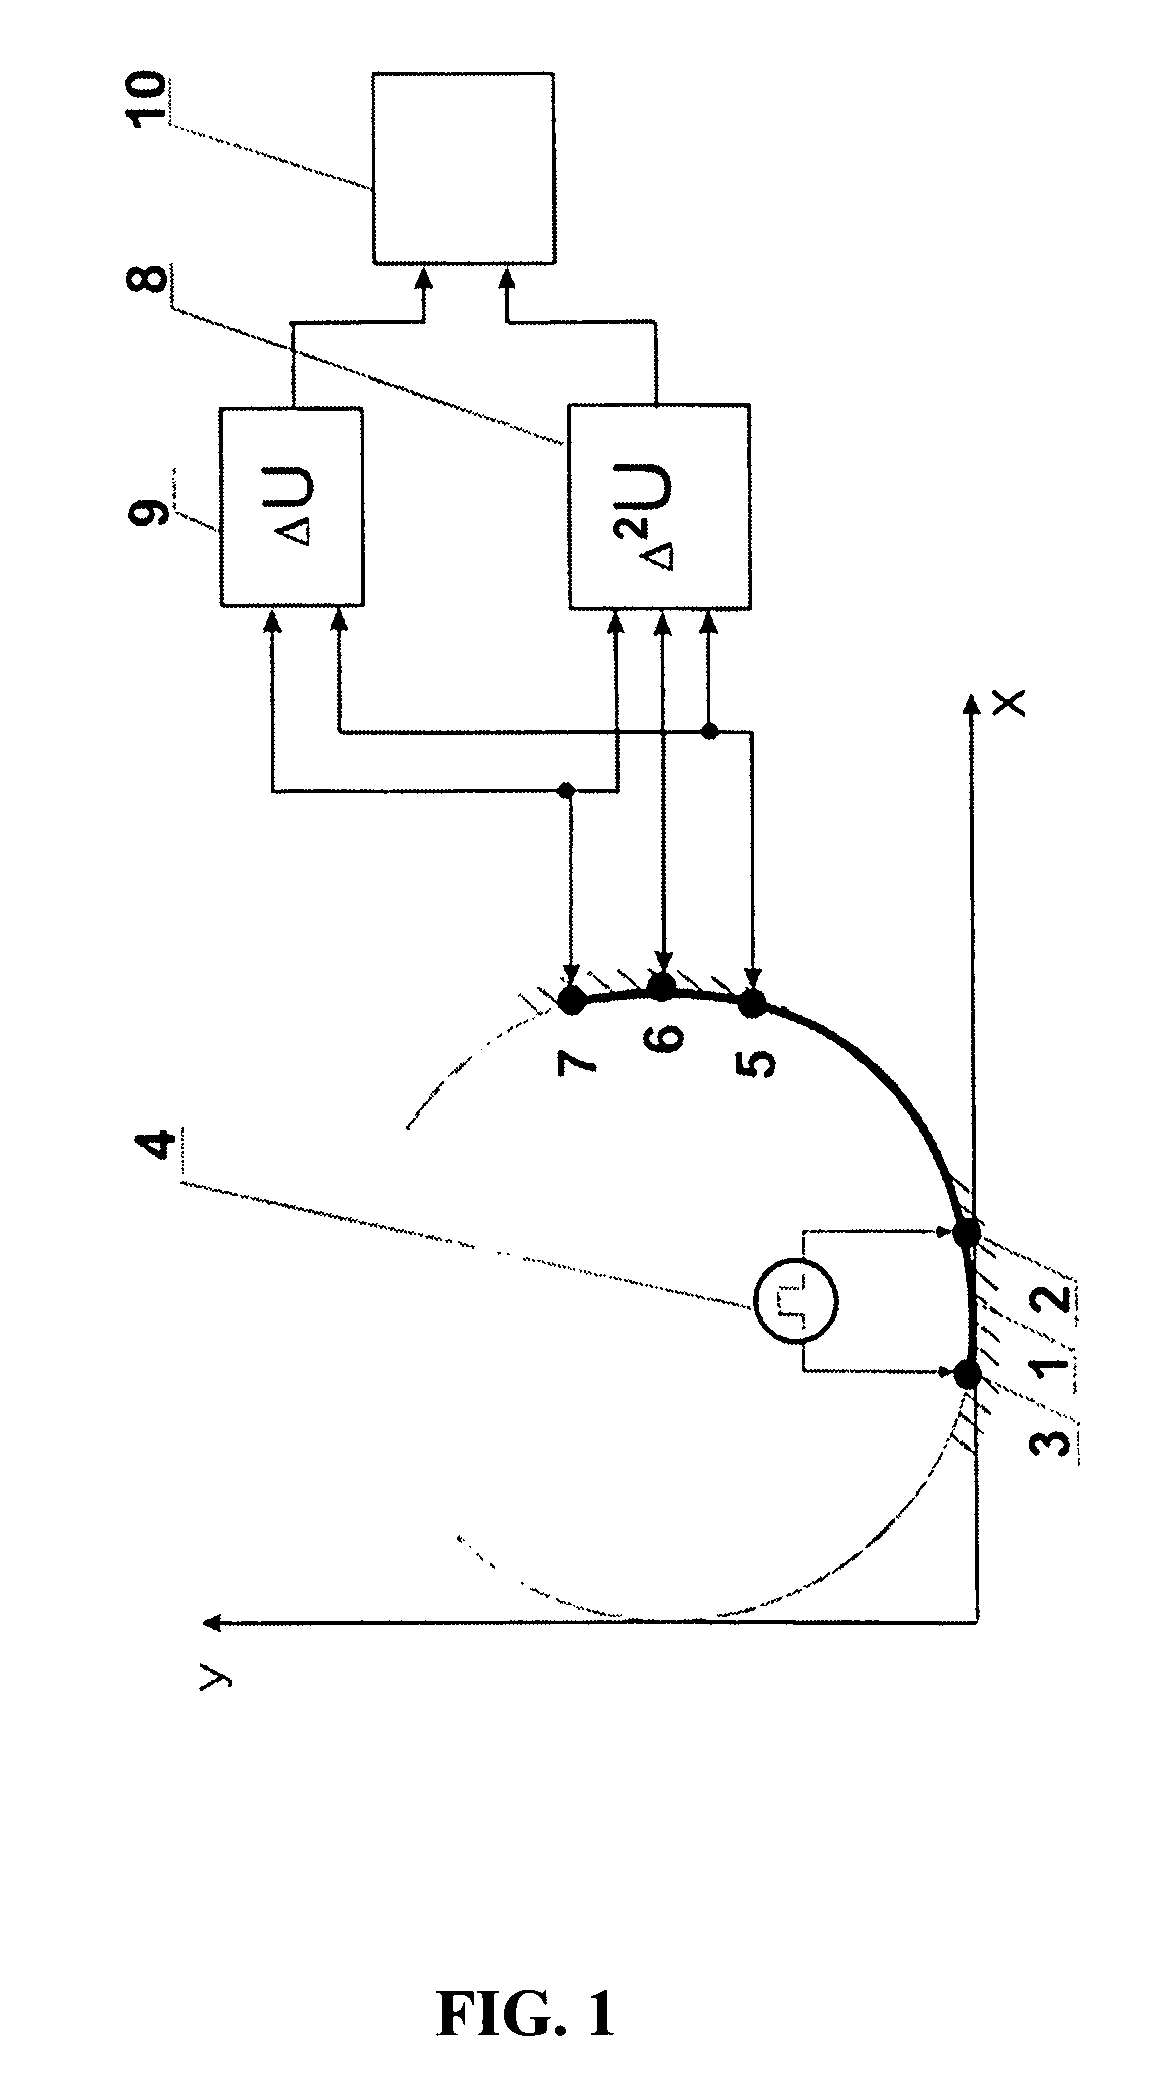 Method of marine electromagnetic survey using focusing electric current